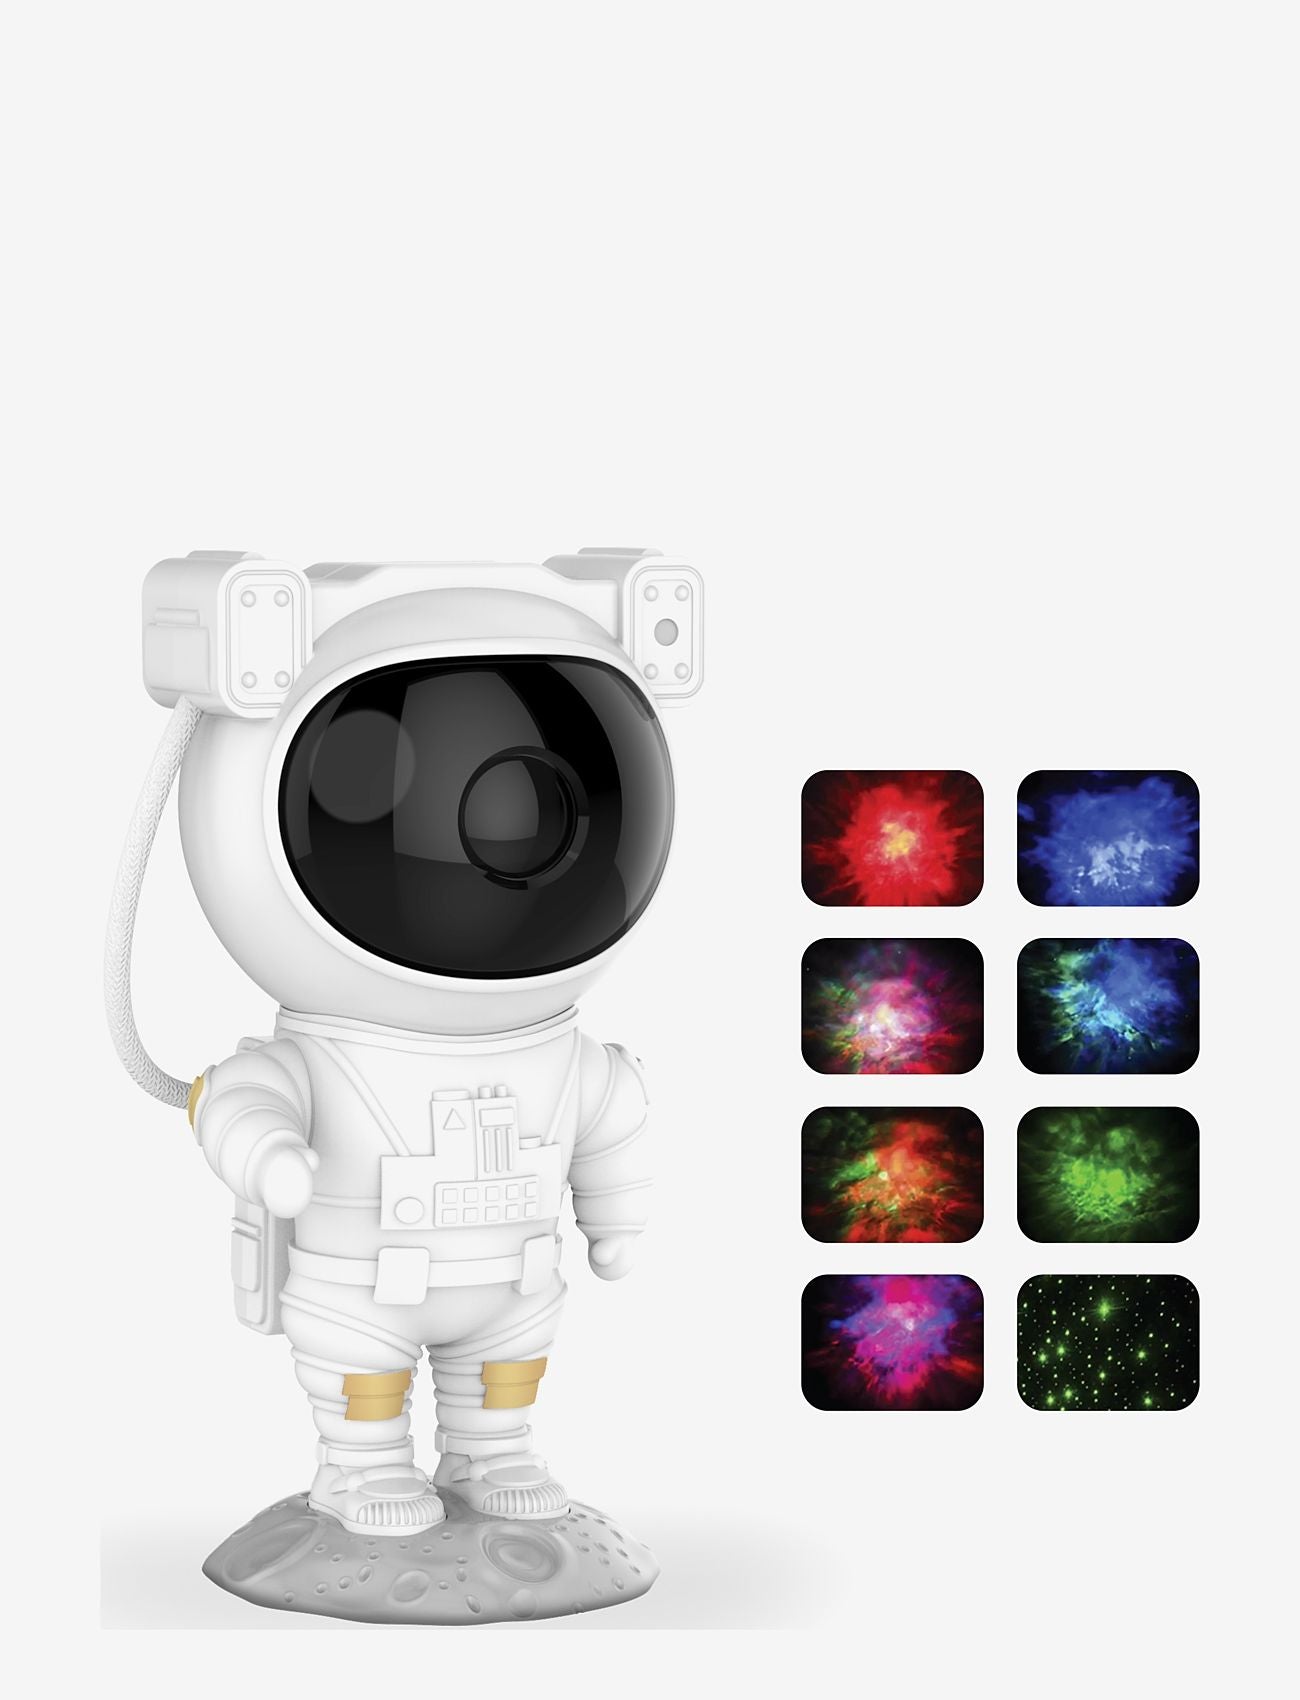 MOB Galaxy Light - Projector Milky Way - 7 Colors